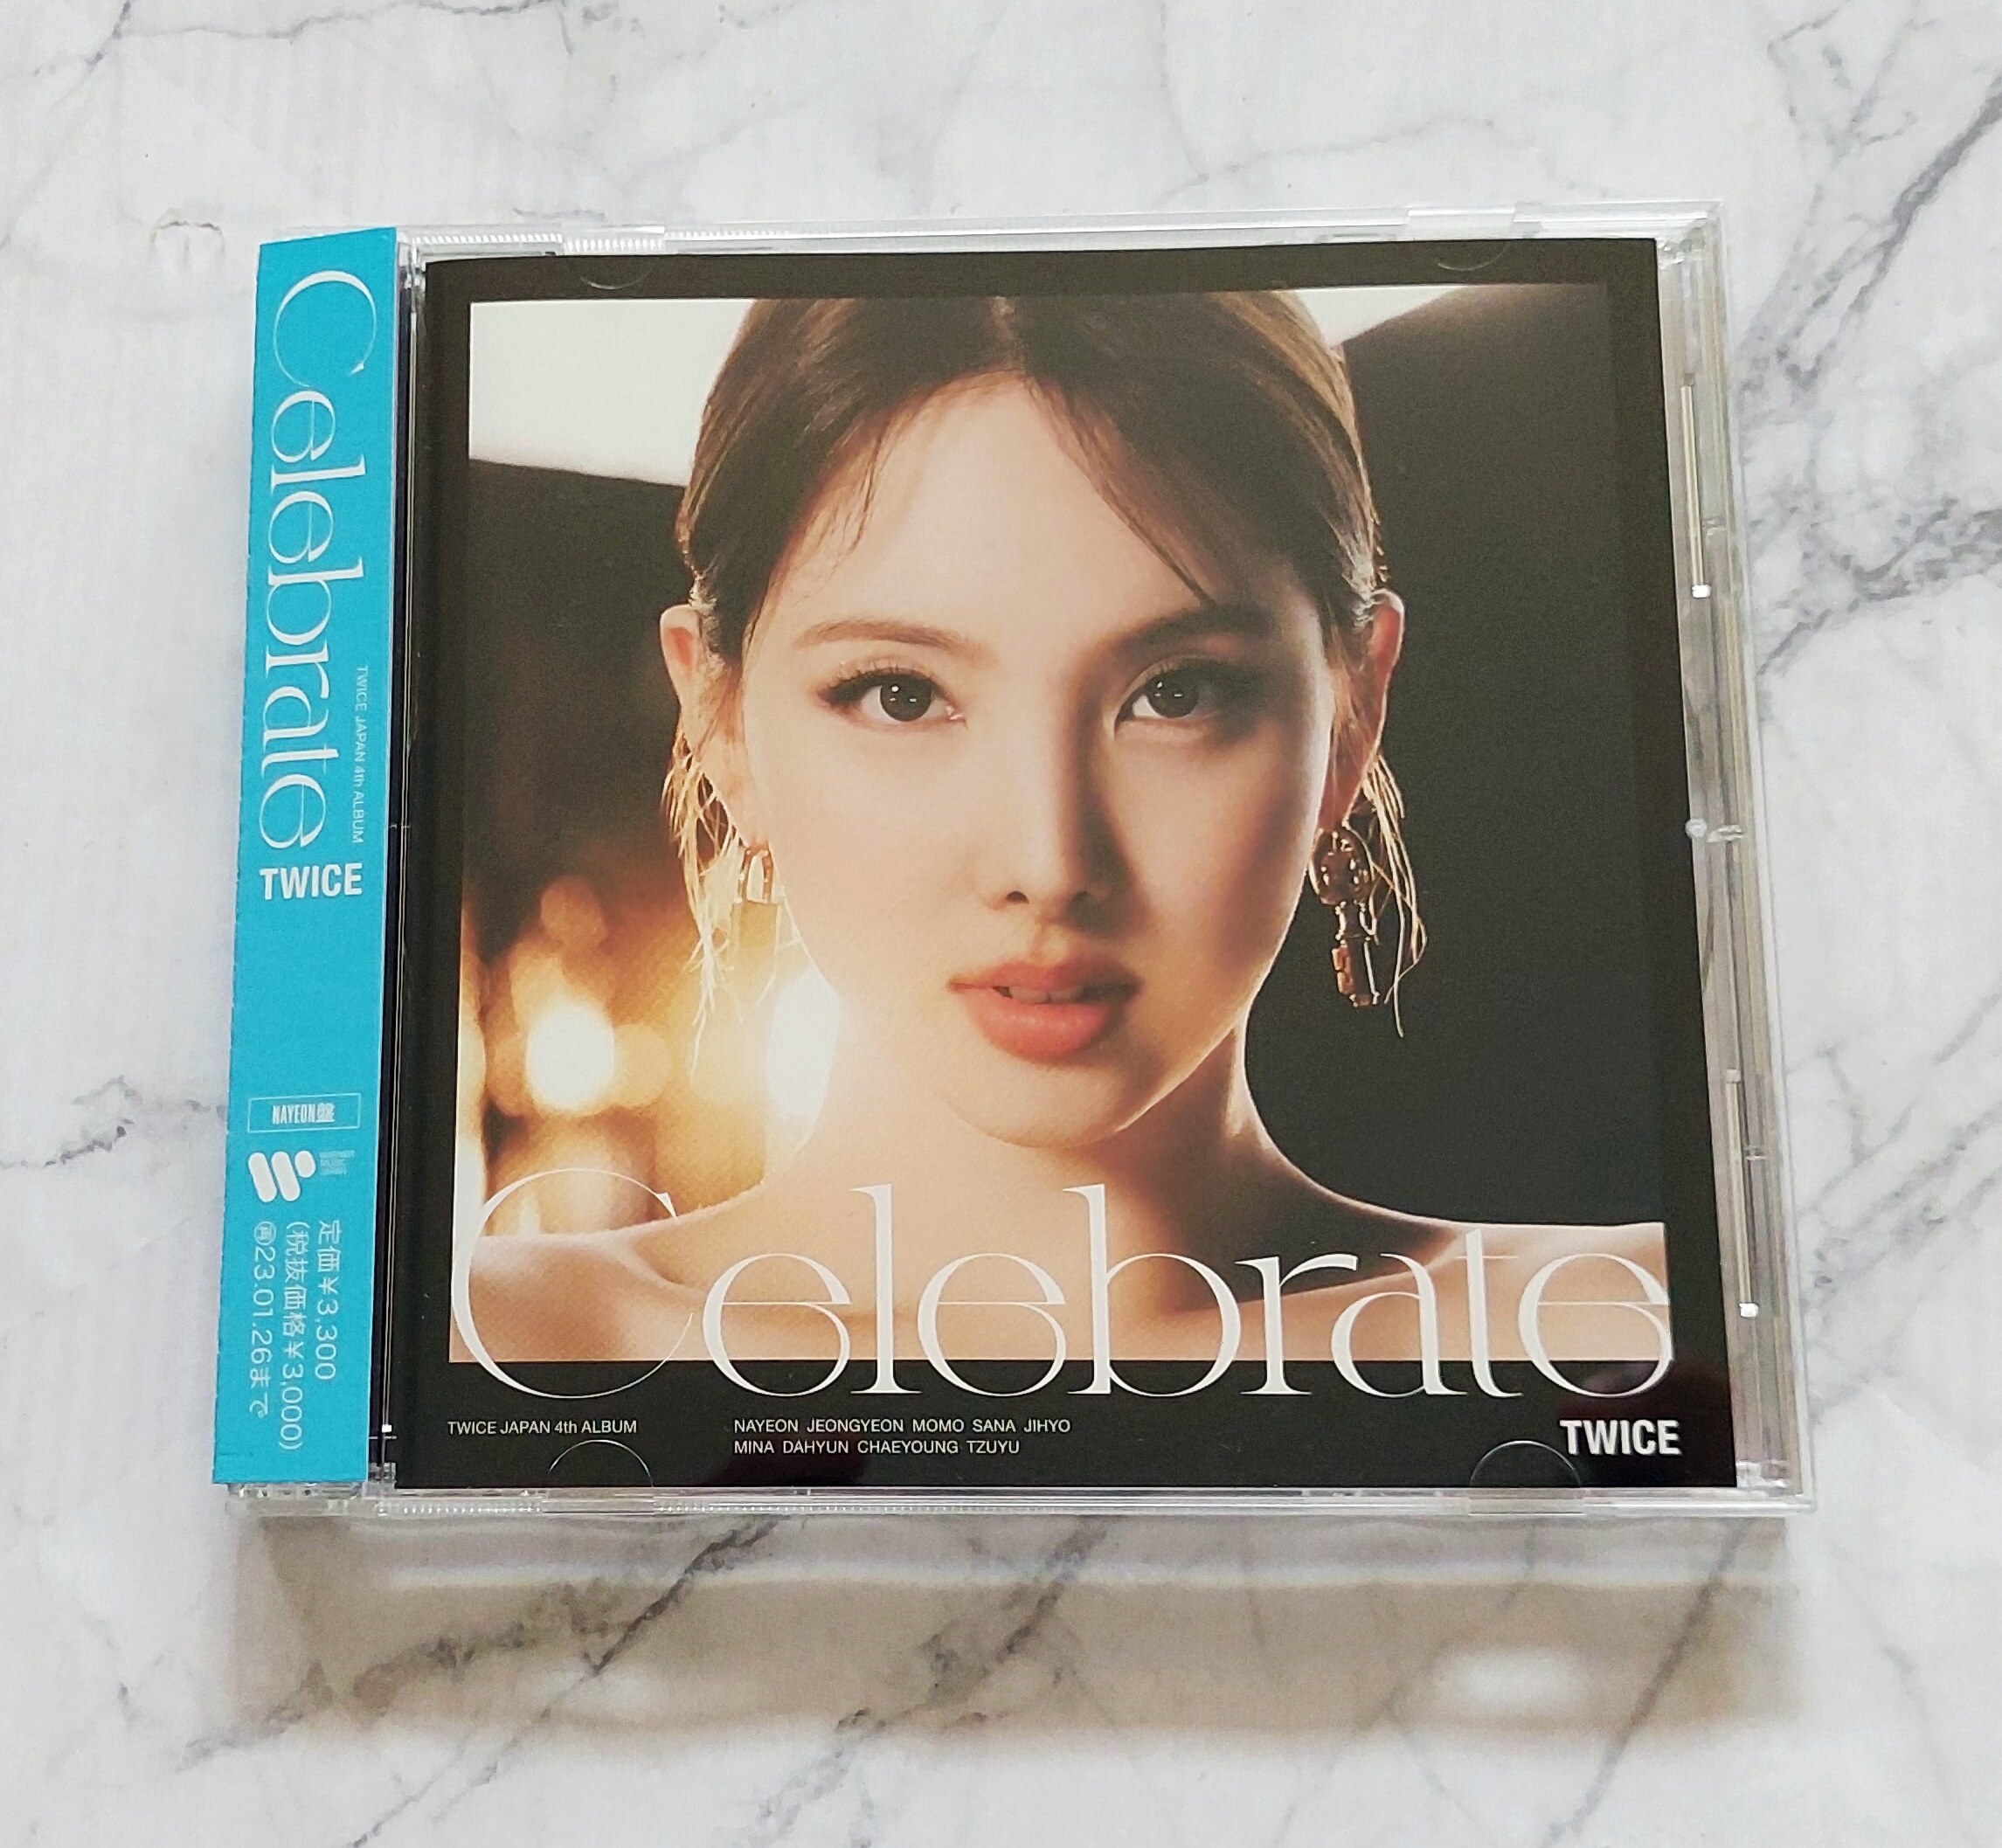 TWICE - Celebrate [Japanese Album]